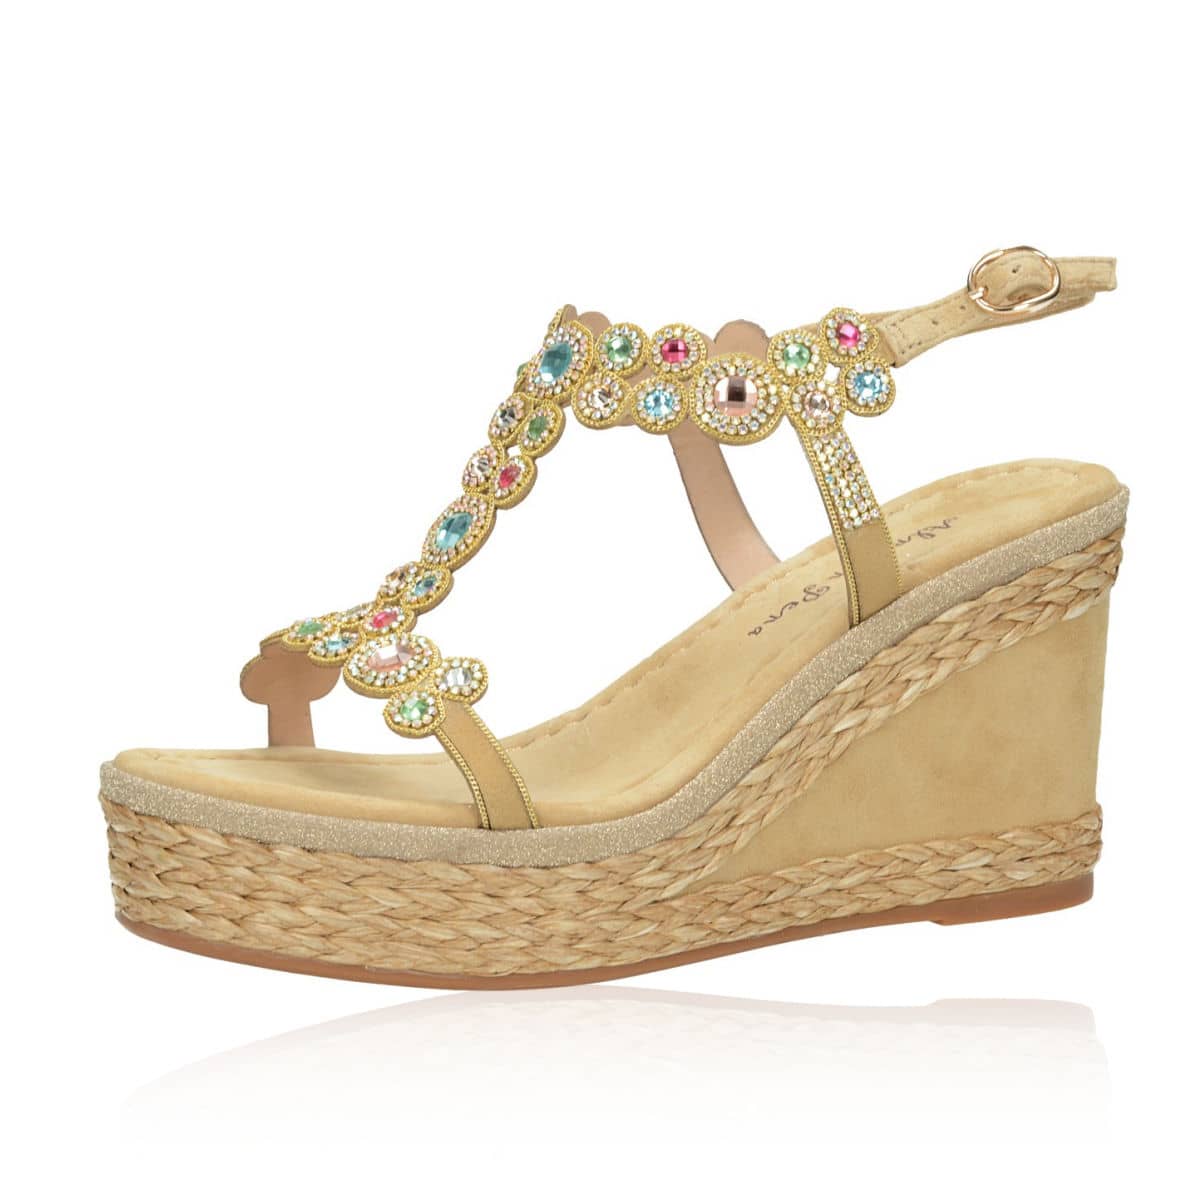 Alma en Pena fashion sandals - beige | Robel.shoes